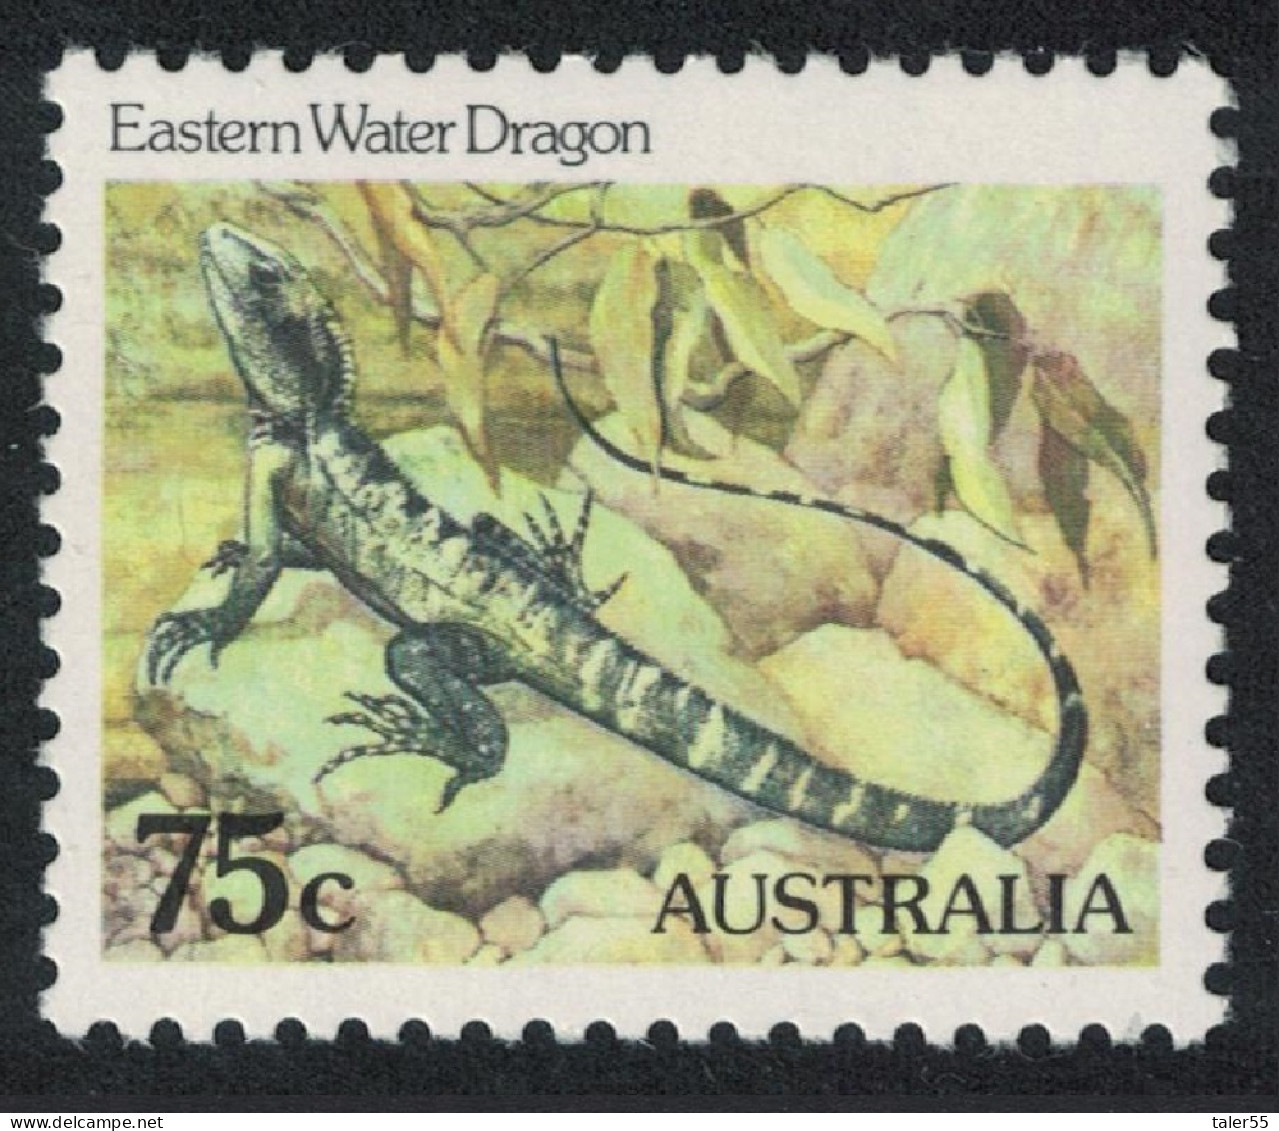 Australia Eastern Water Dragon Lizard 75c 1981 MNH SG#801 - Mint Stamps